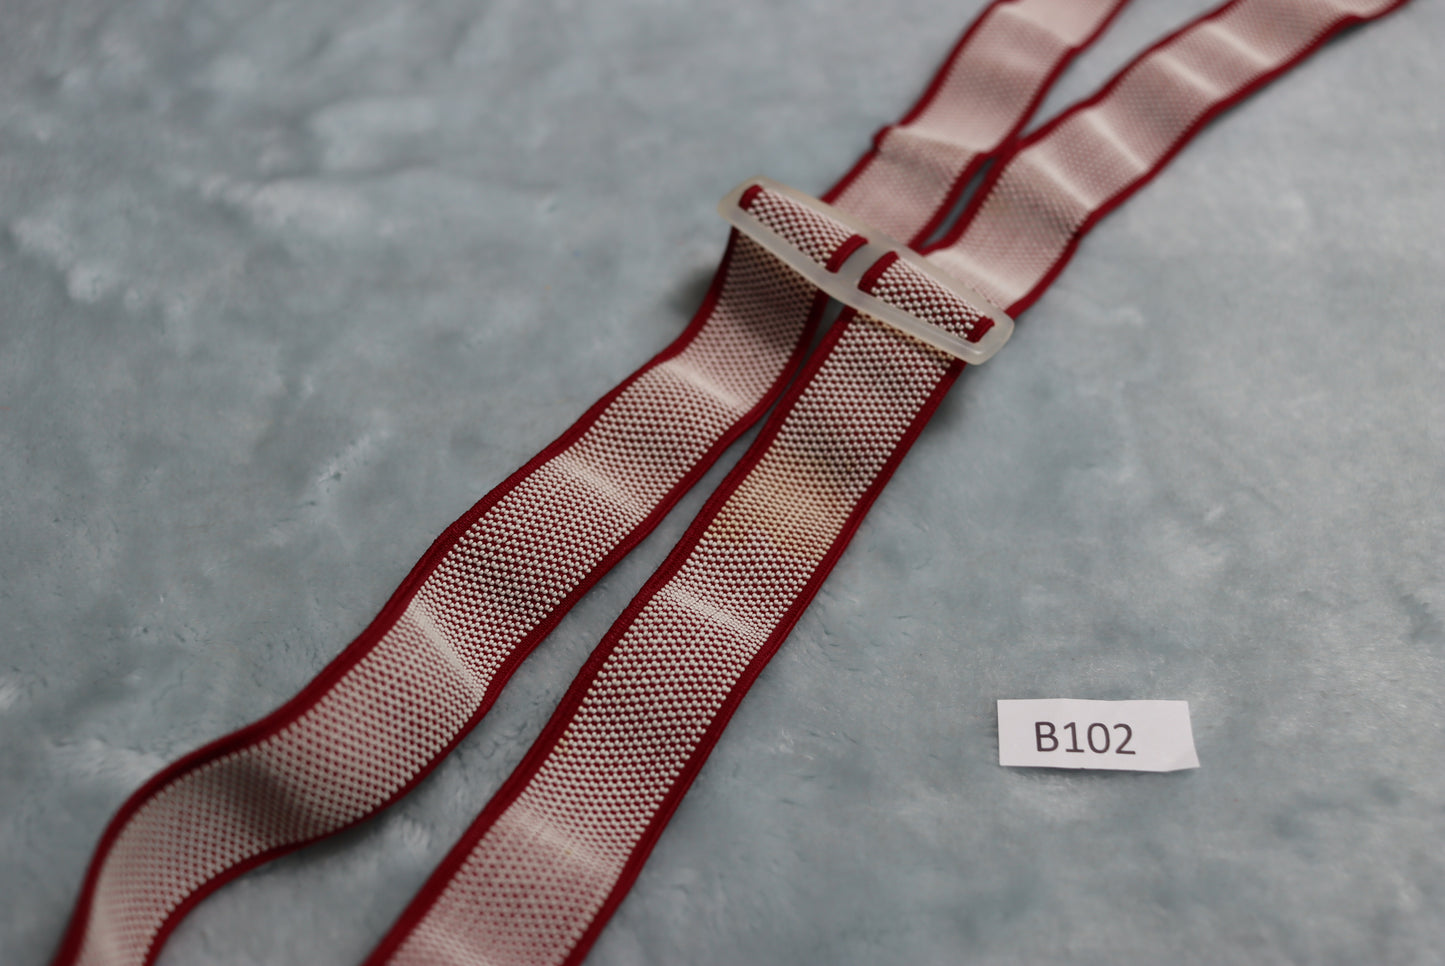 Vintage 1970s dark red white elasticated braces silver metal clips adjustable